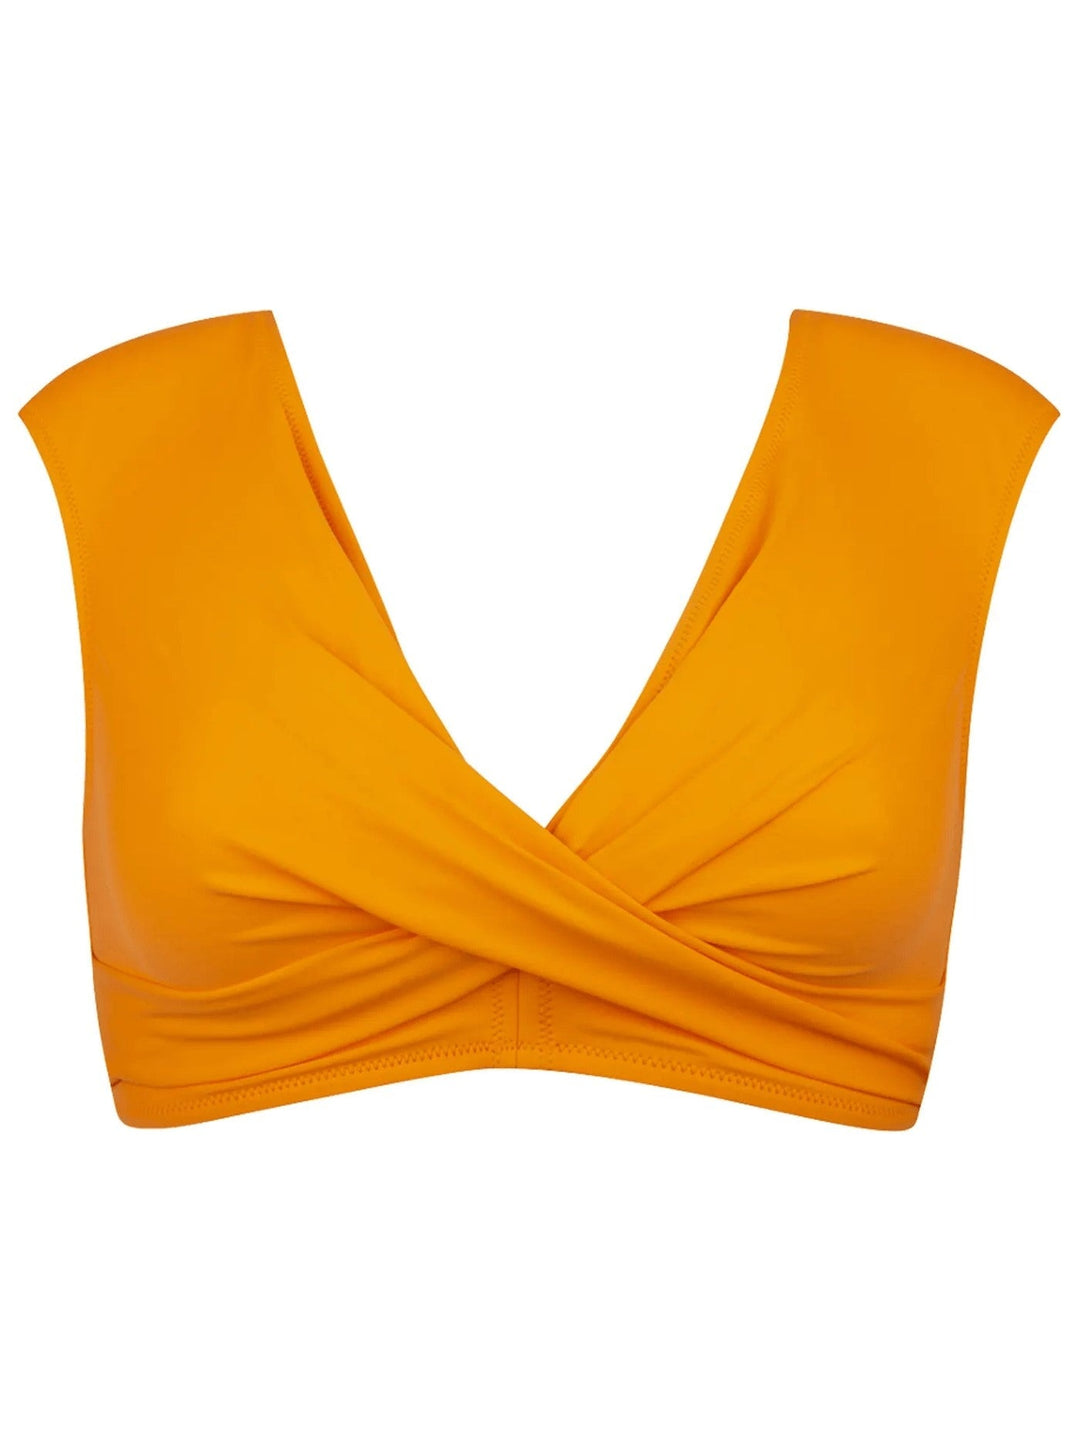 Antigel by Lise Charmel - Haut de maillot de bain triangle doux La Chiquissima Bikini soft orange Maillots de bain Antigel by Lise Charmel